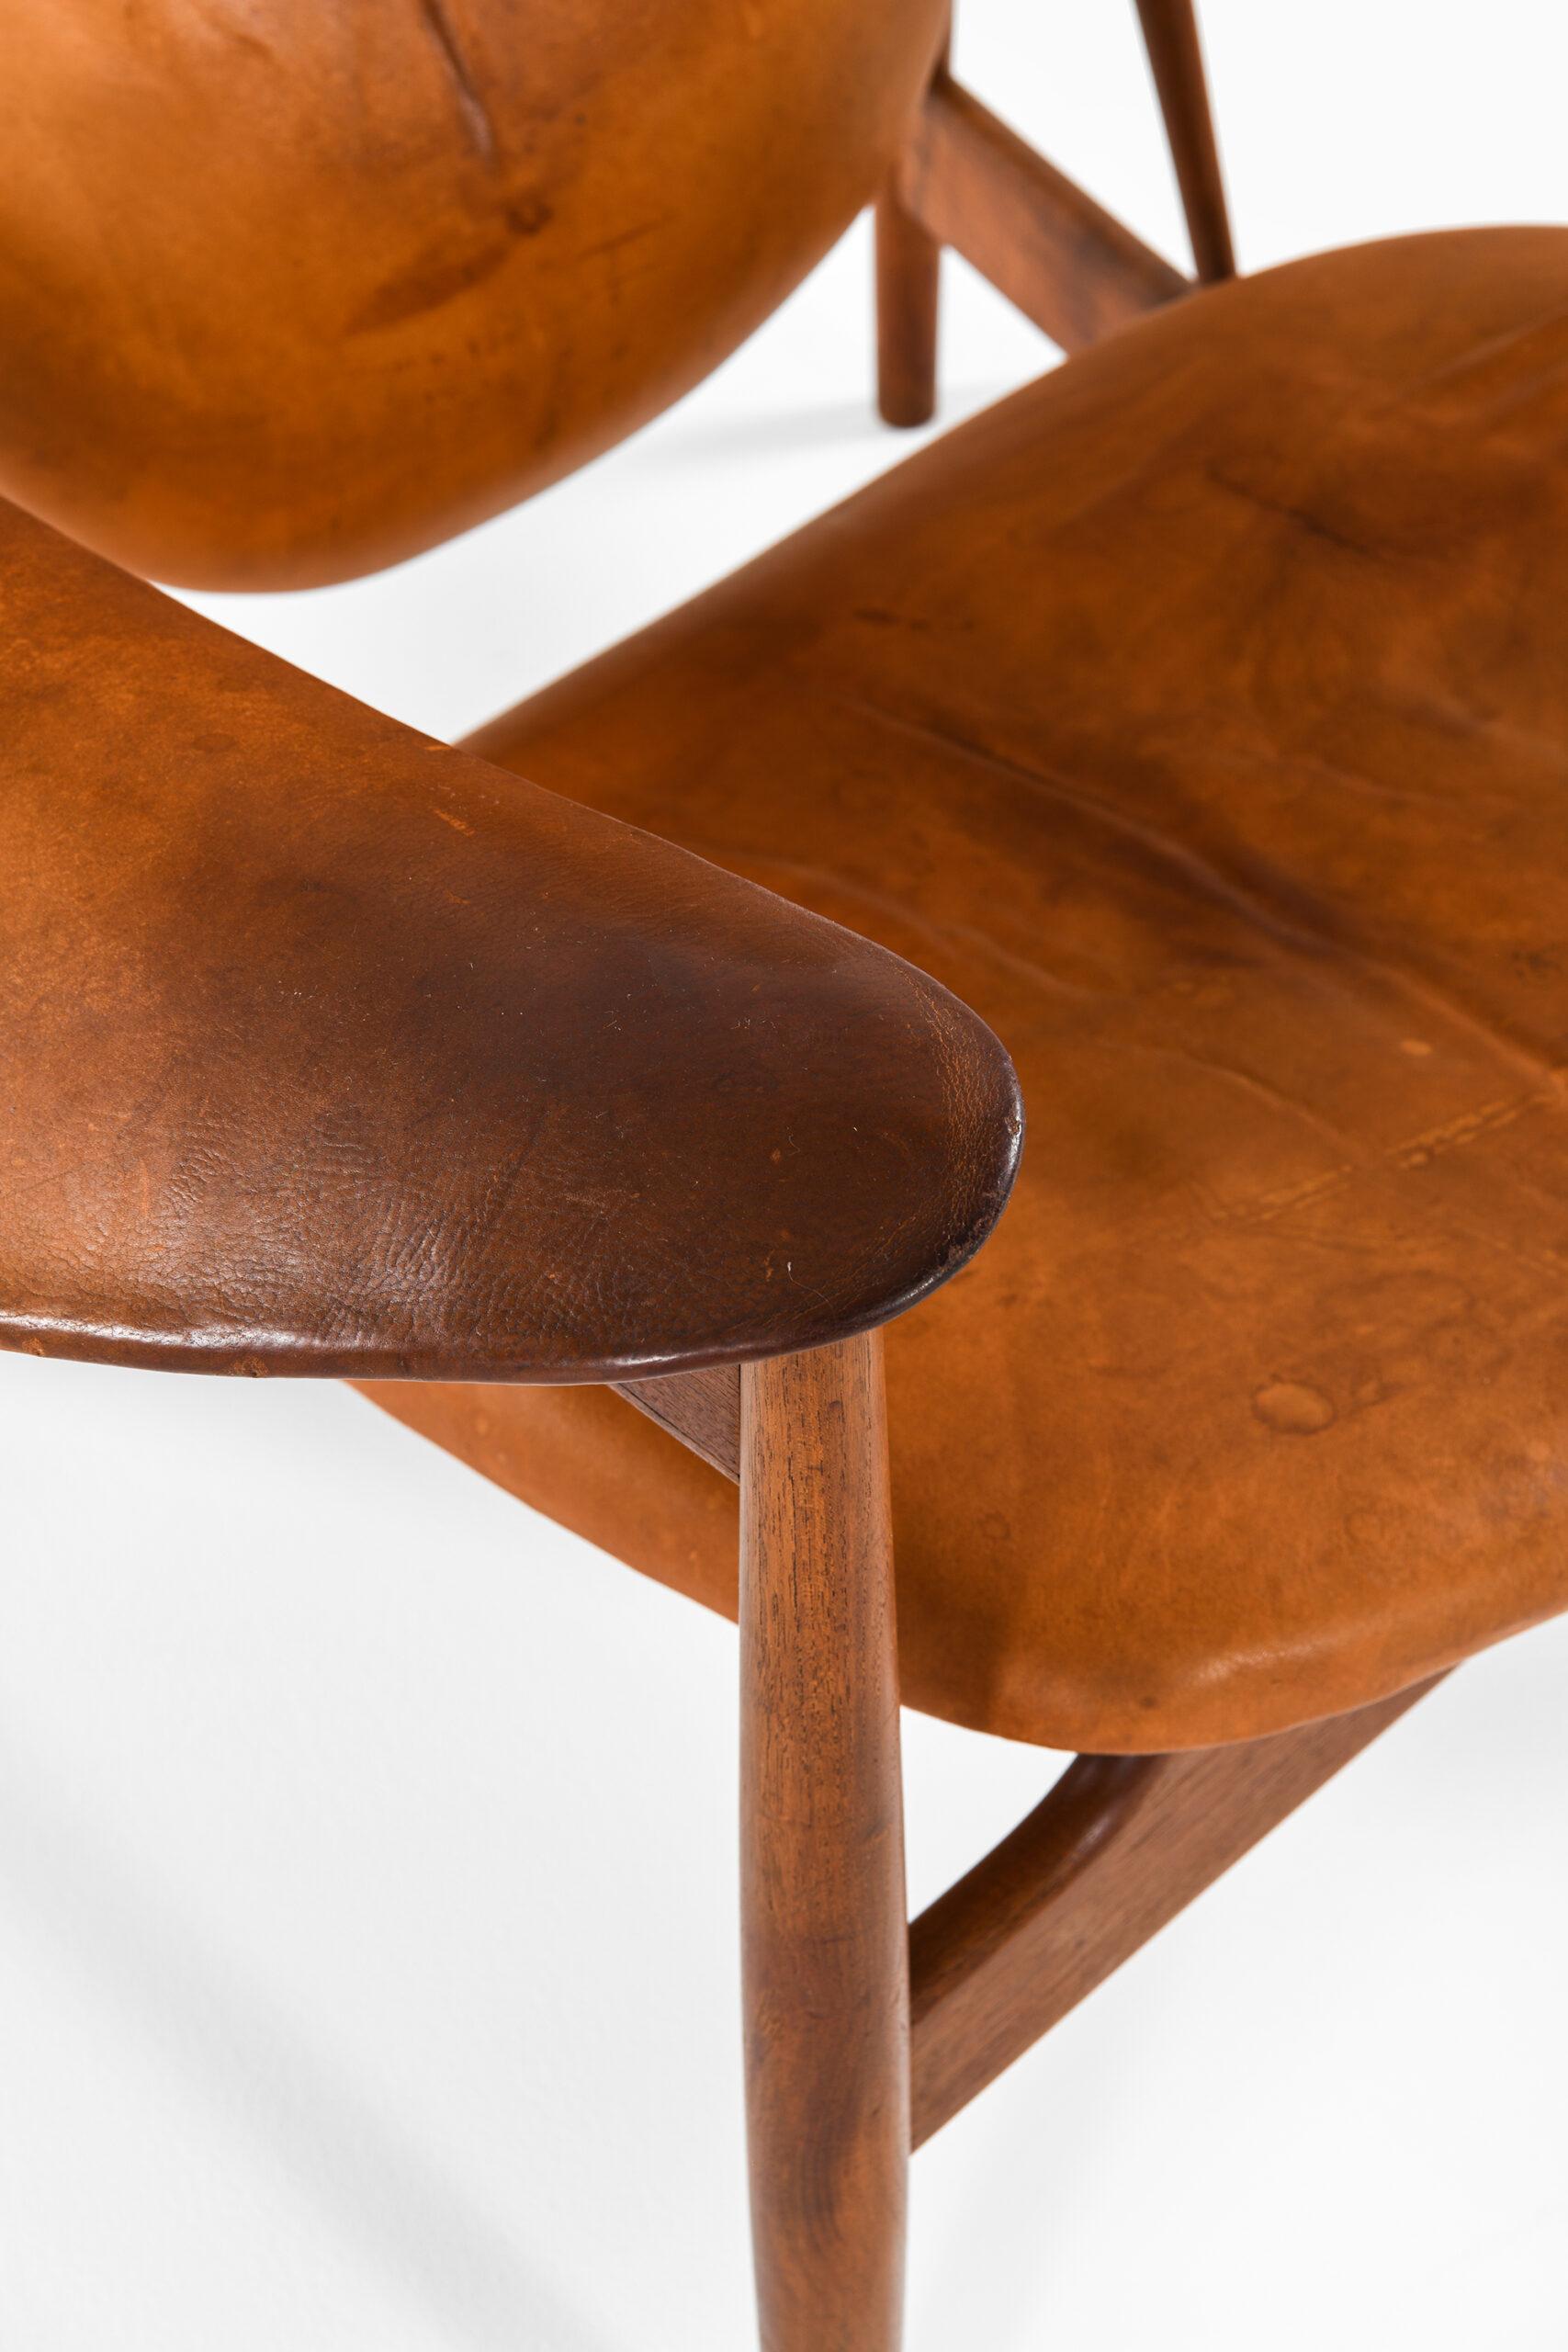 Finn Juhl Chieftain Easy Chair Produced by Cabinetmaker Niels Vodder 1